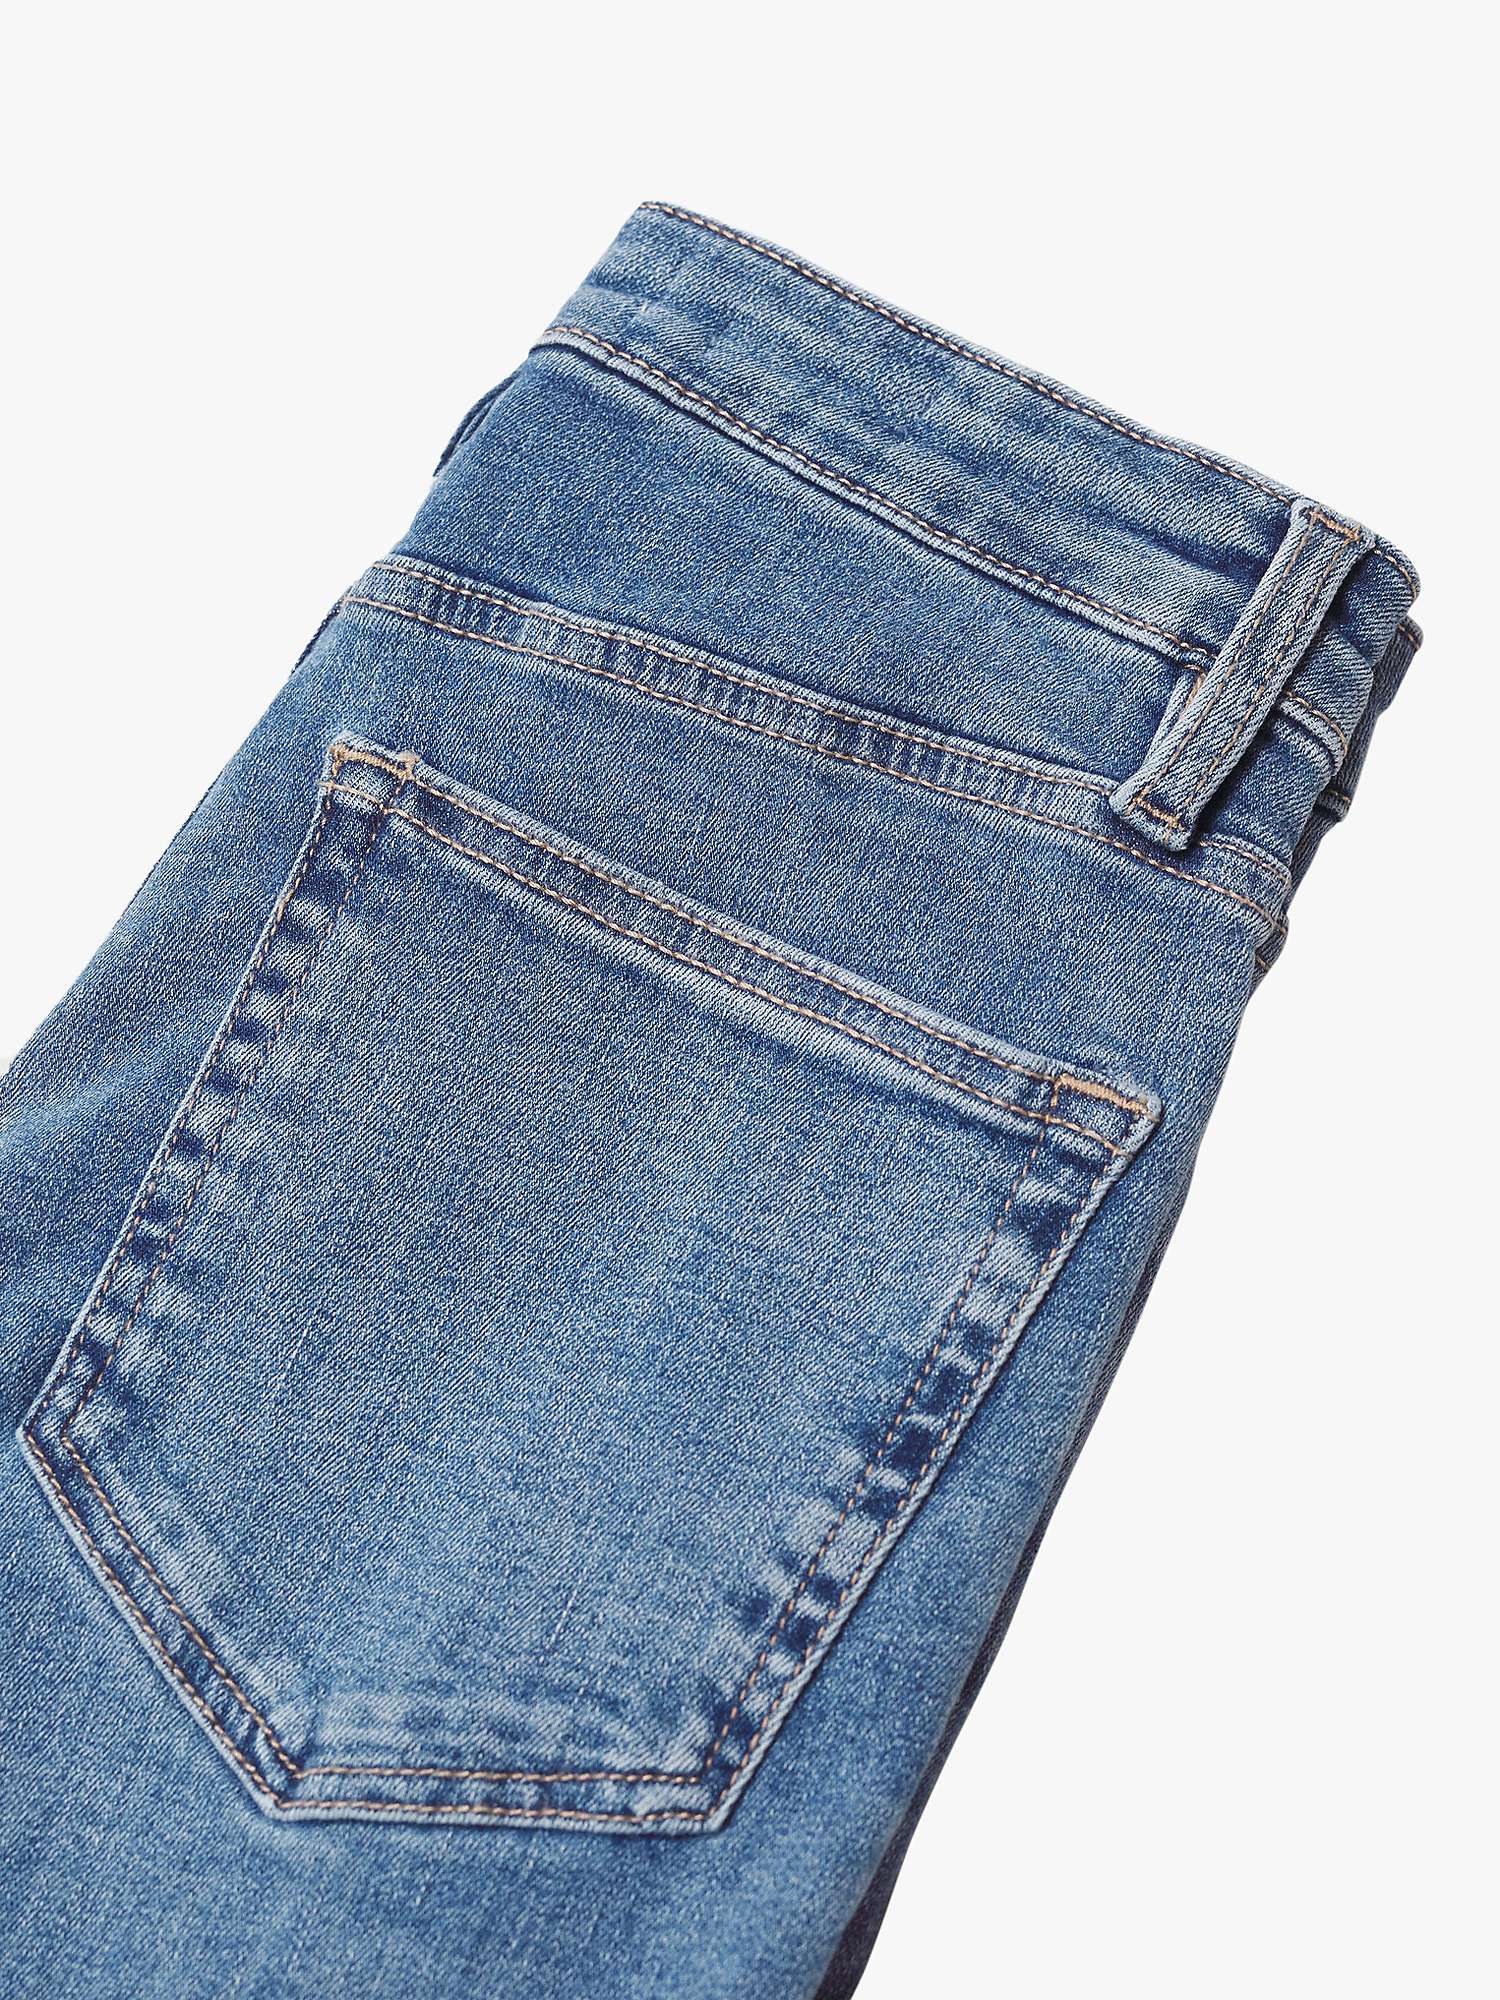 Buy Mango Anne High Waist Skinny Jeans Online at johnlewis.com